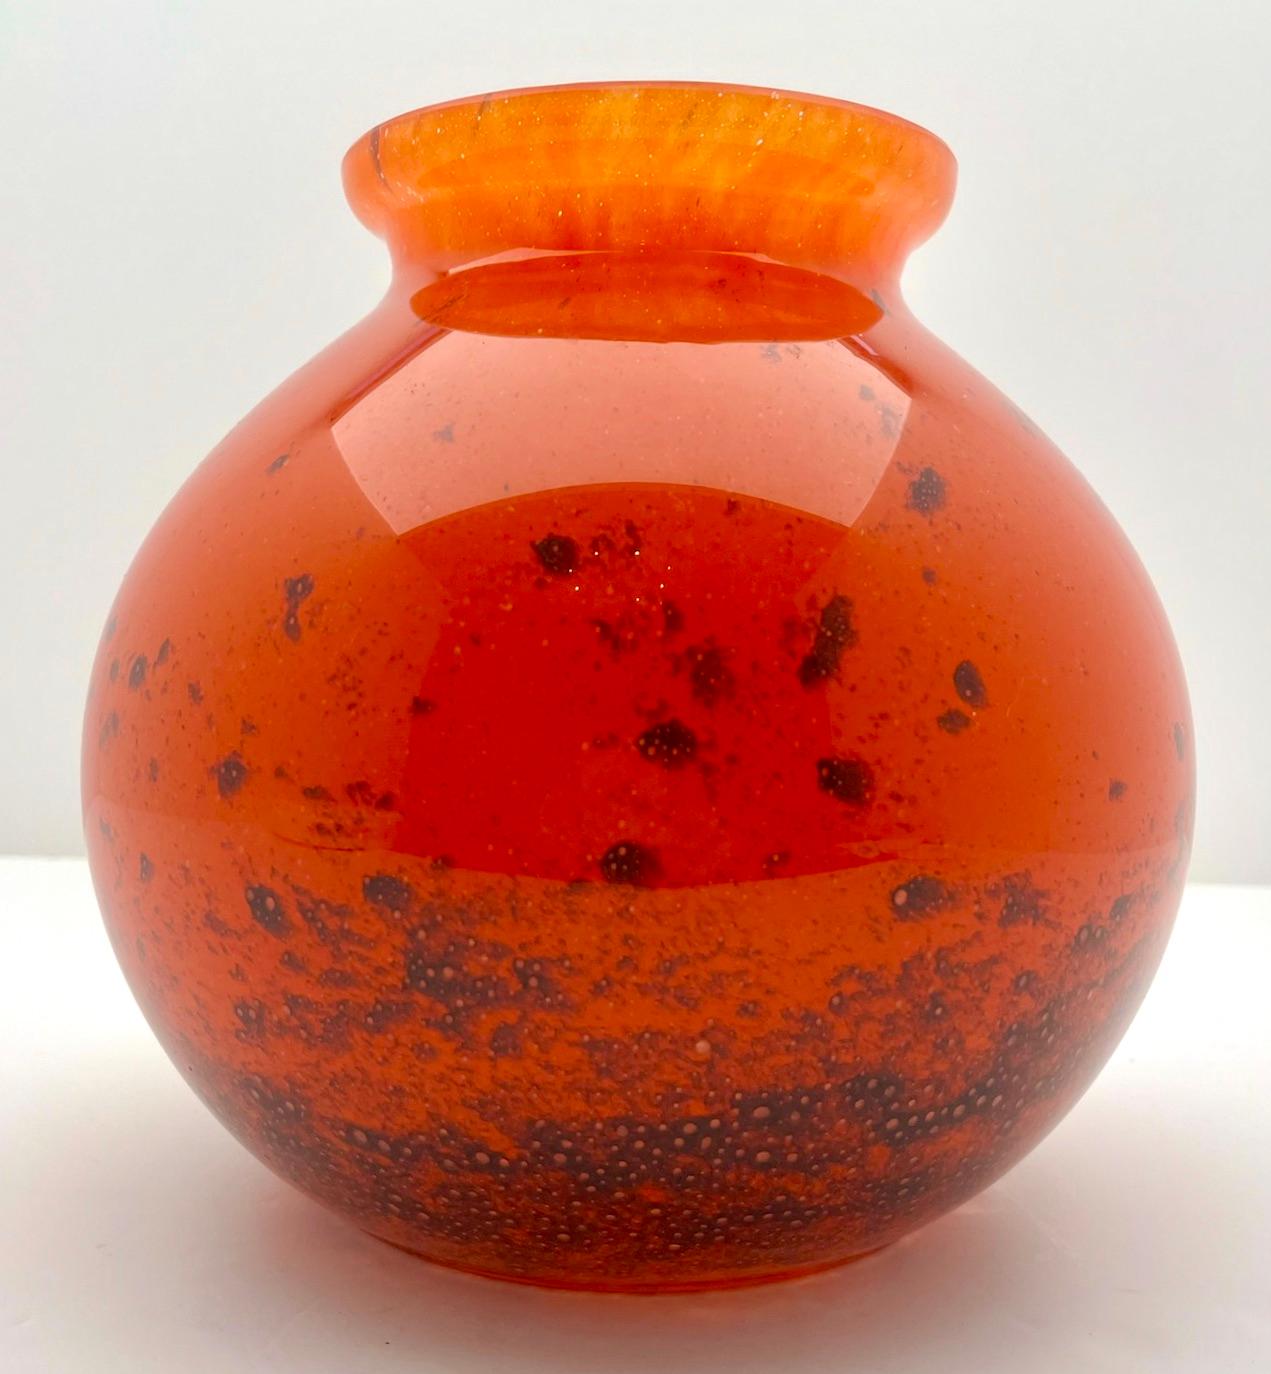  WMF 'Ikora'  art glass Vase
German glass Vase by Karl Wiedmann for WMF Ikora, 1930s Baushaus Art Deco.

A decorative 'Ikora' glass Vase, produced, by WMF (Wurttembergische Metallwarenfabrik) in Germany.

The piece is in excellent condition and a